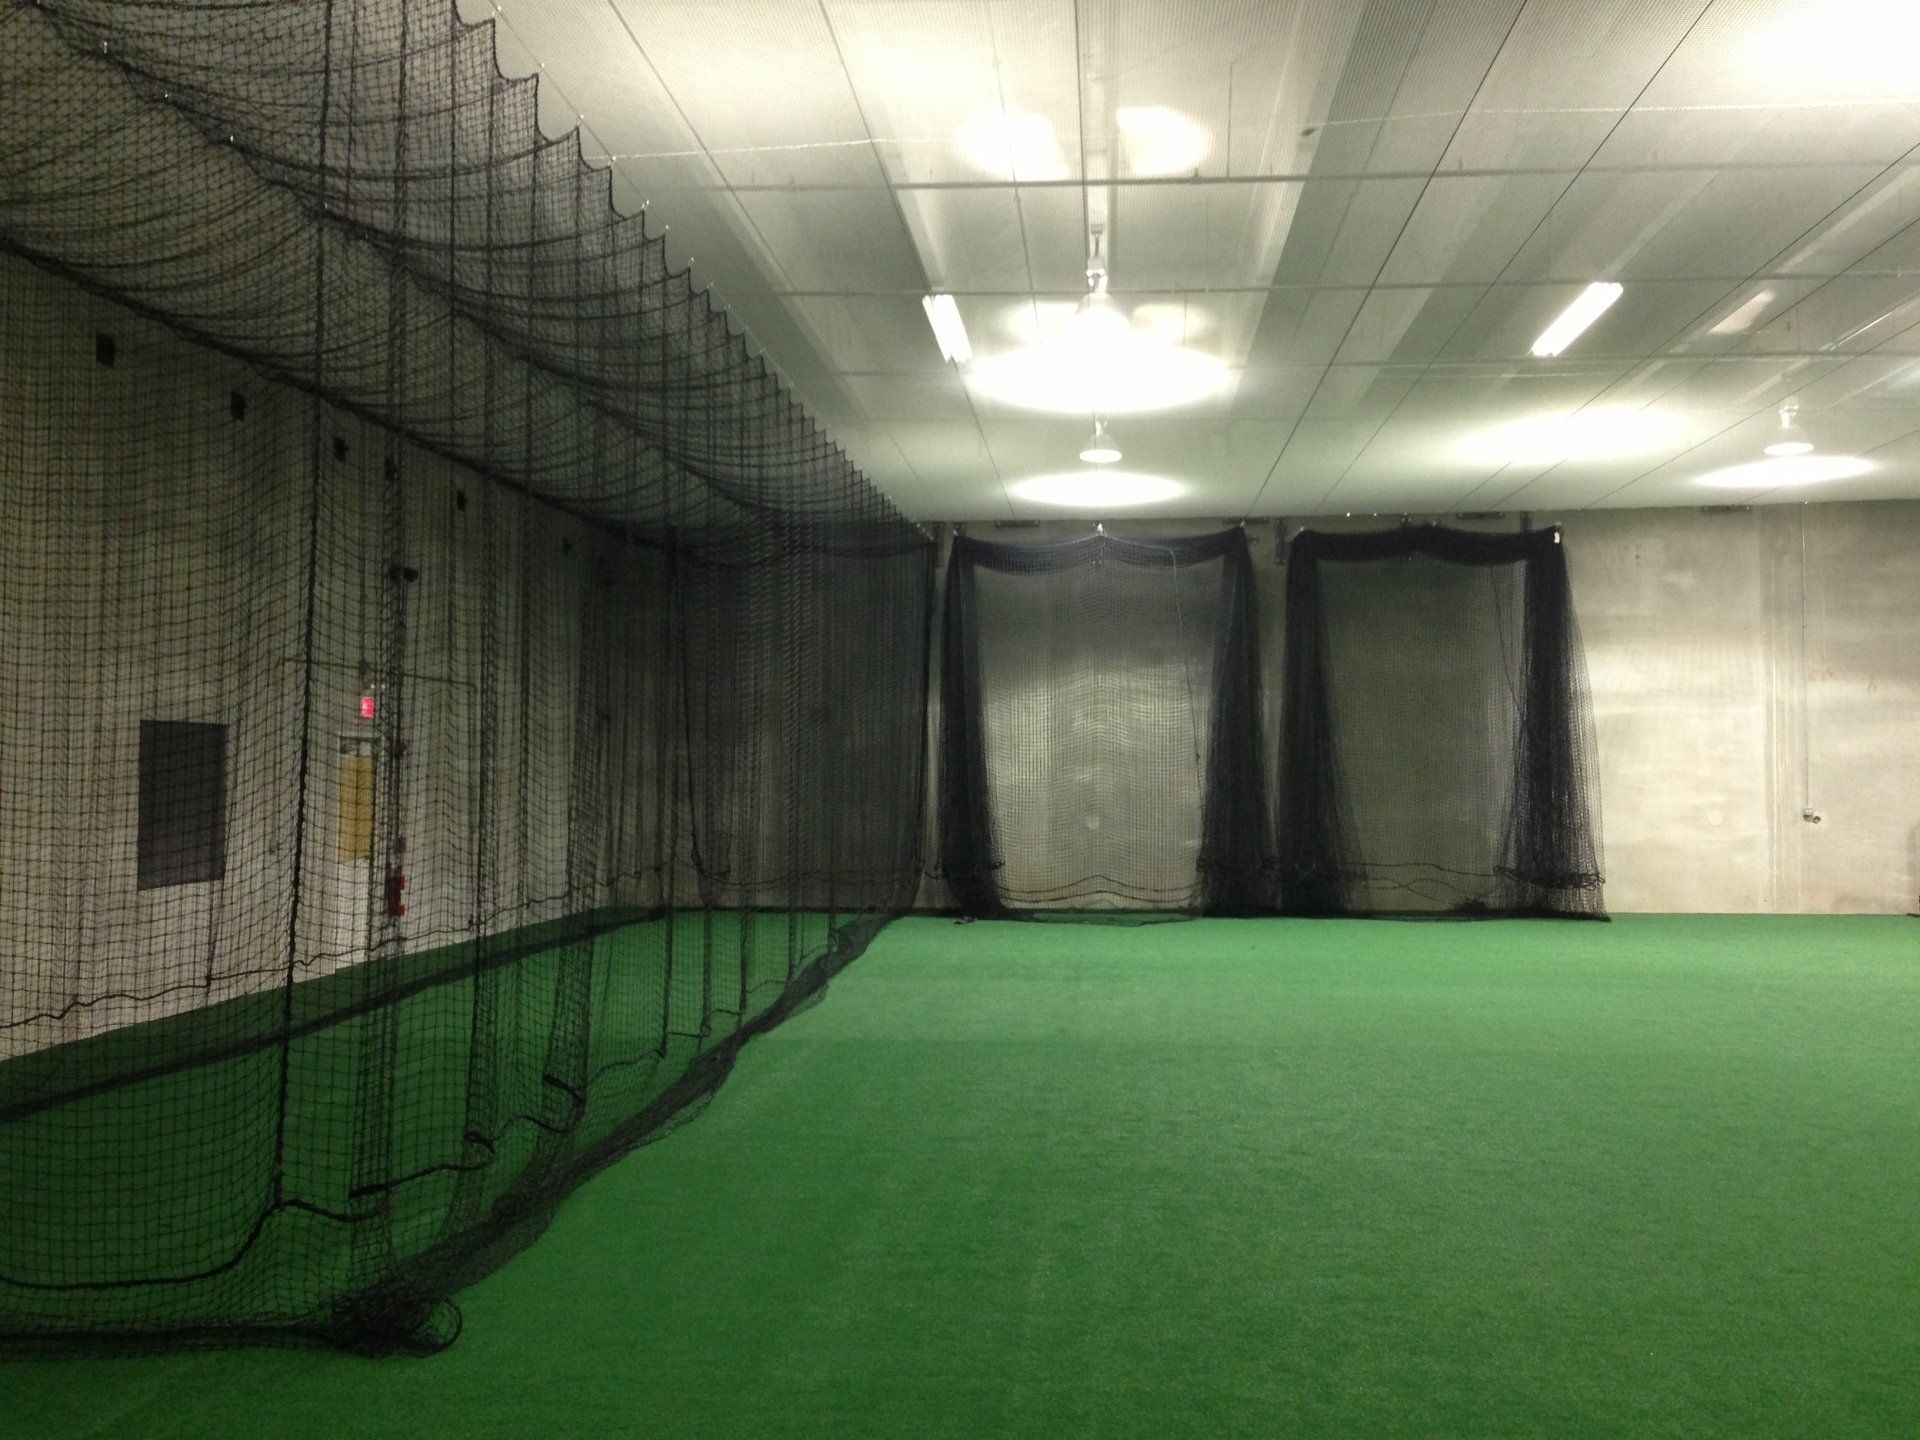 indoor batting cages